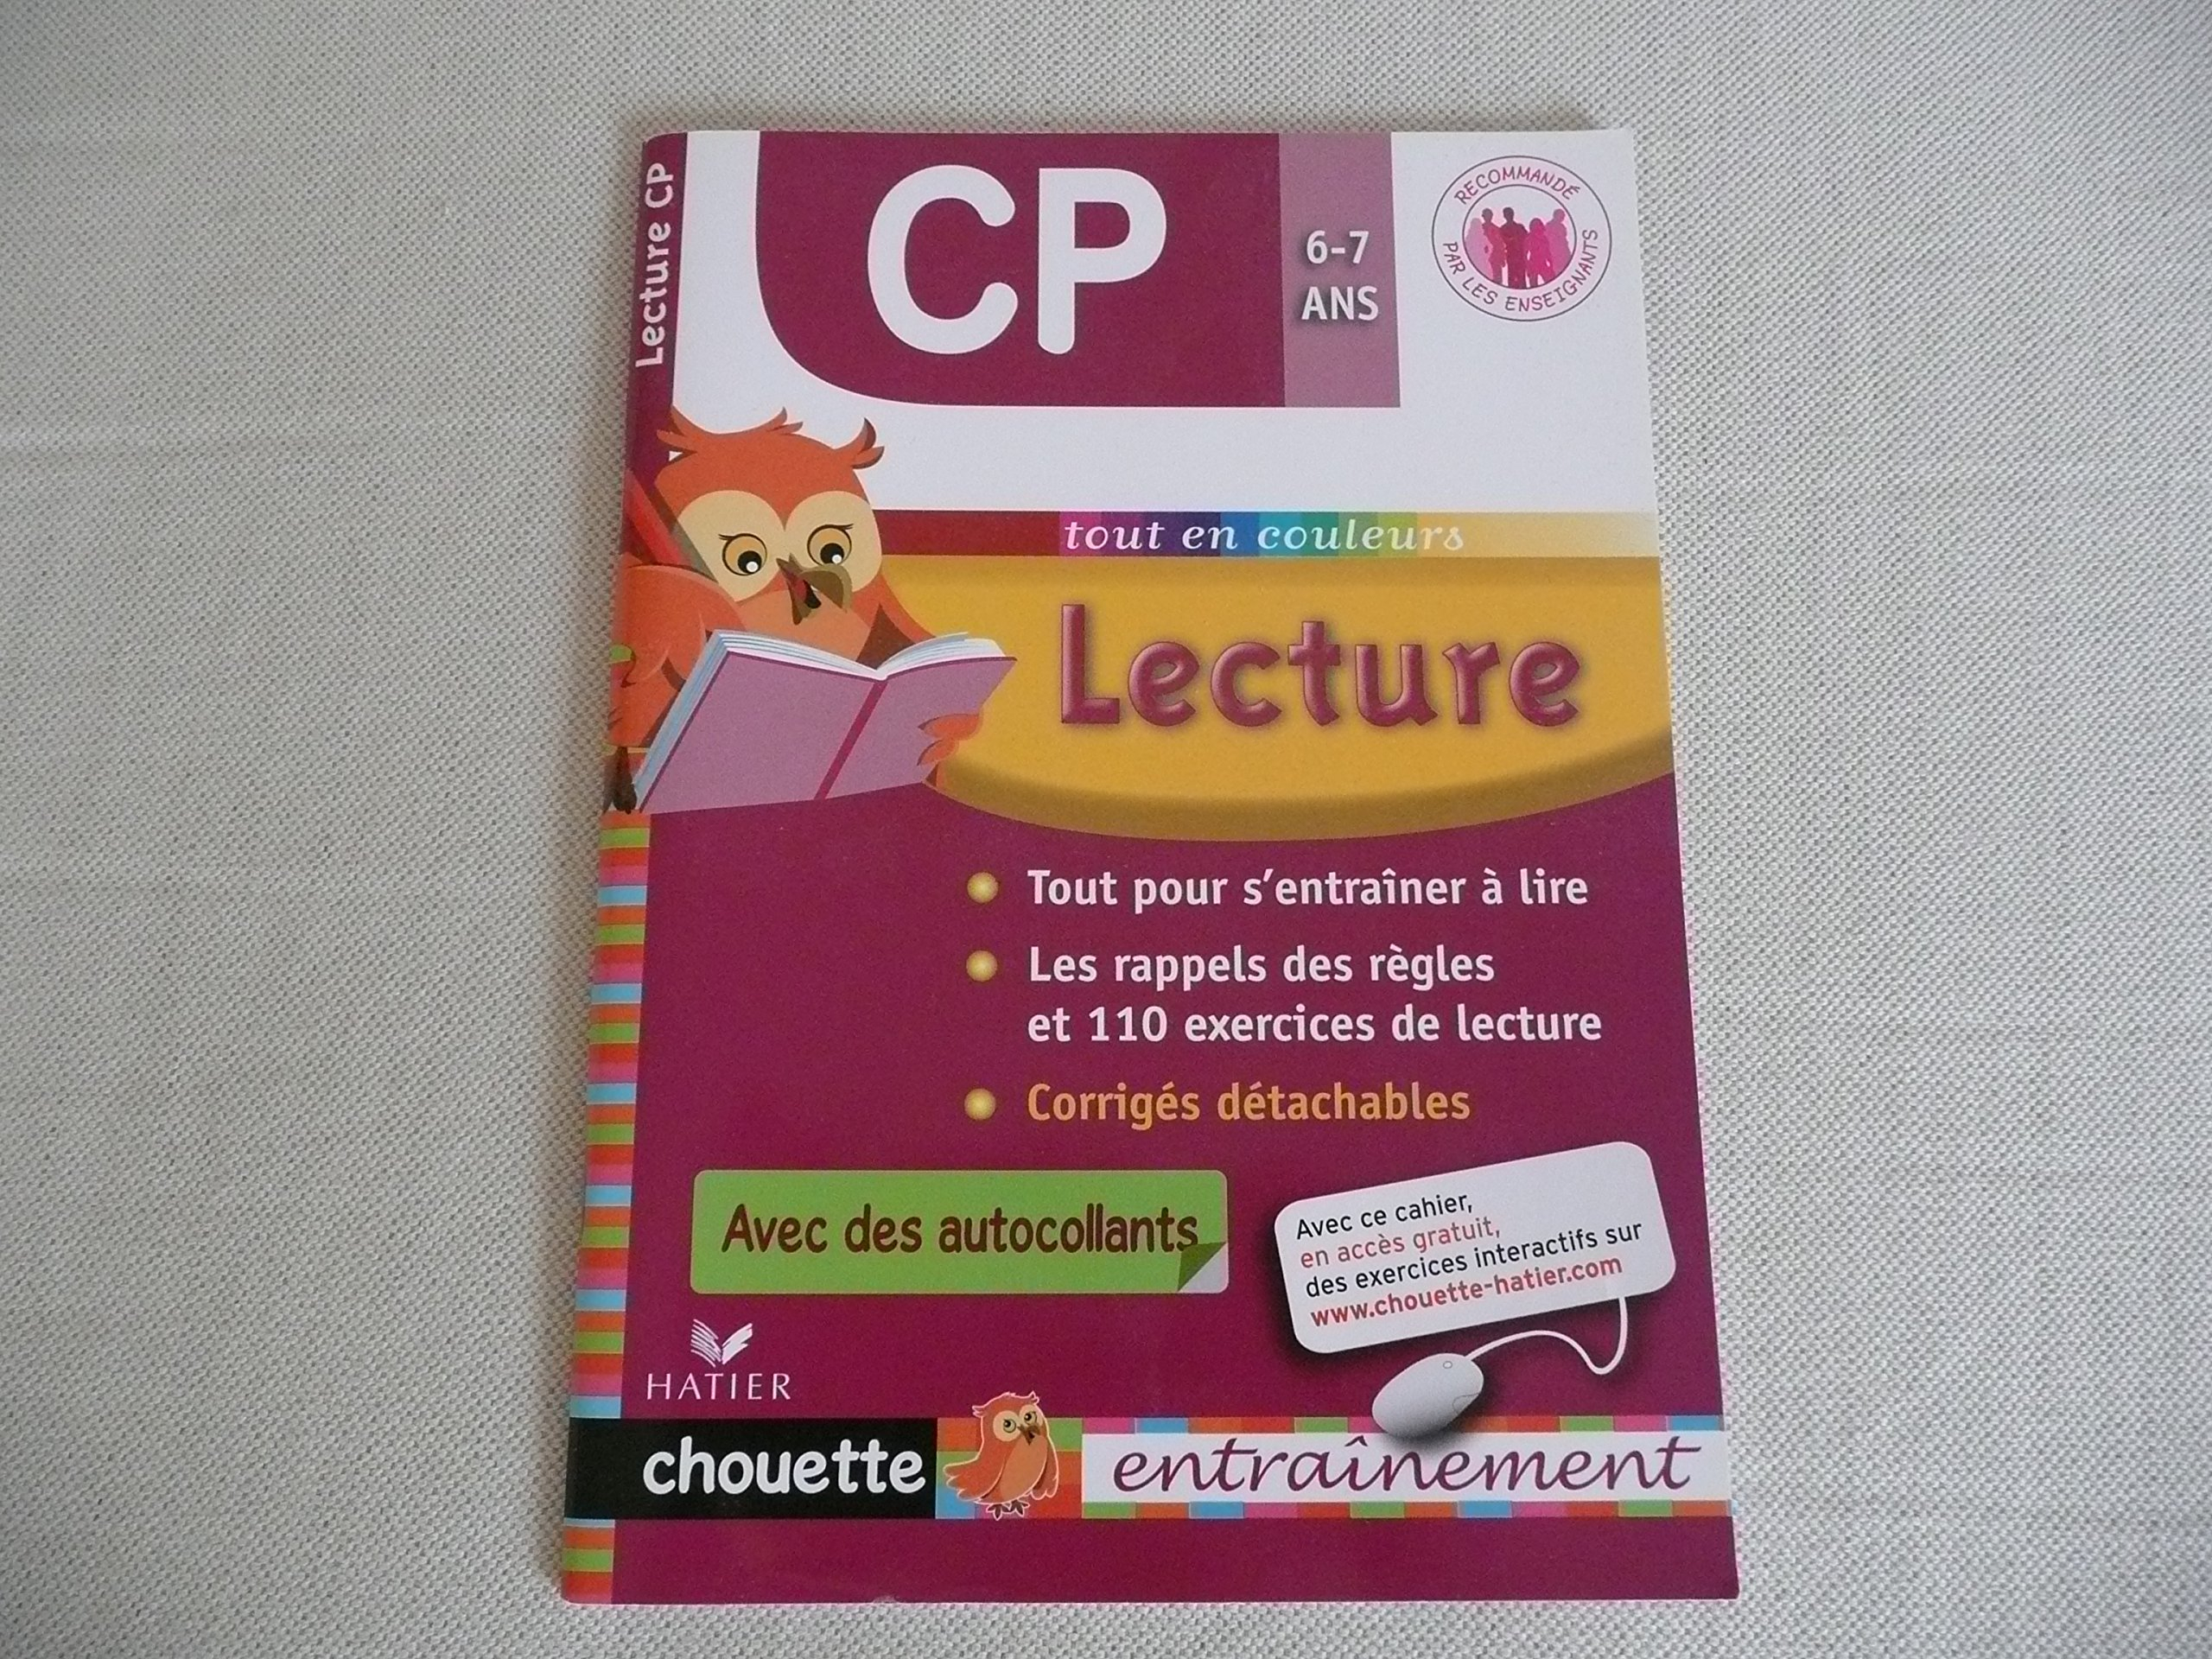 Lecture CP